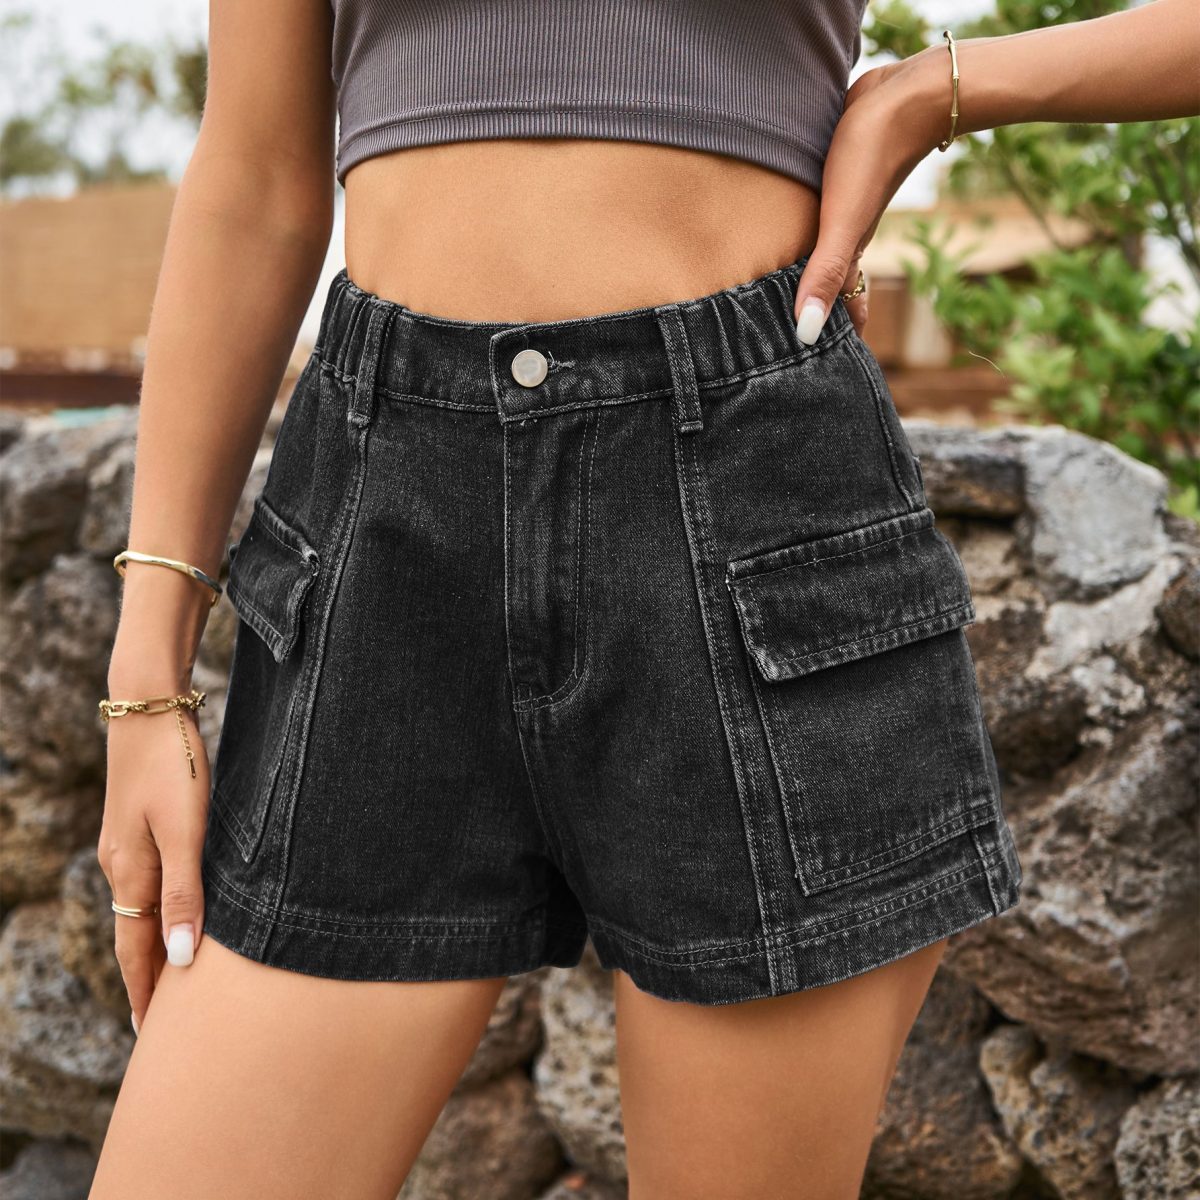 Sexy Denim Cargo Pants Shorts in Shorts